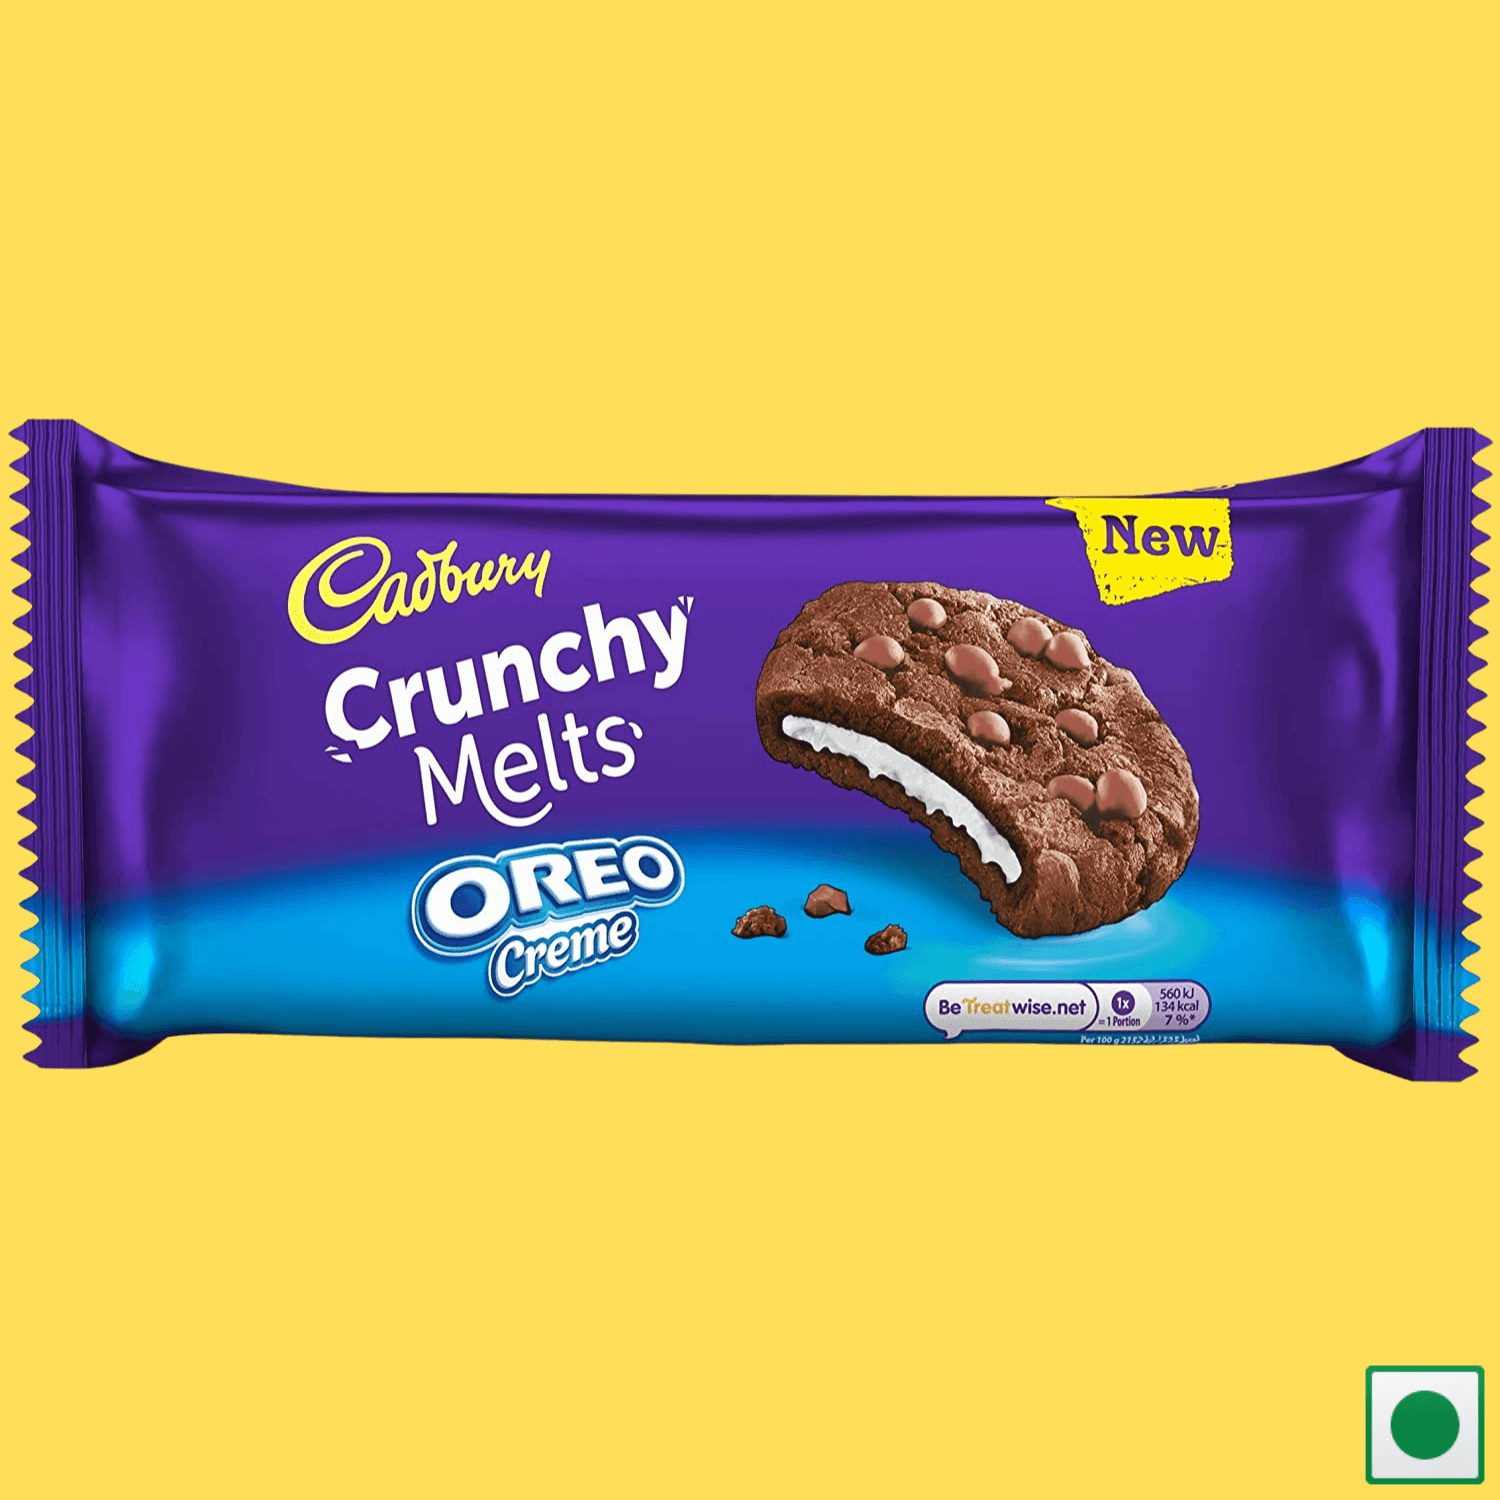 Cadbury Crunchy Melts Oreo Creme Chocolate Cookies, 160g (Imported) - Super 7 Mart